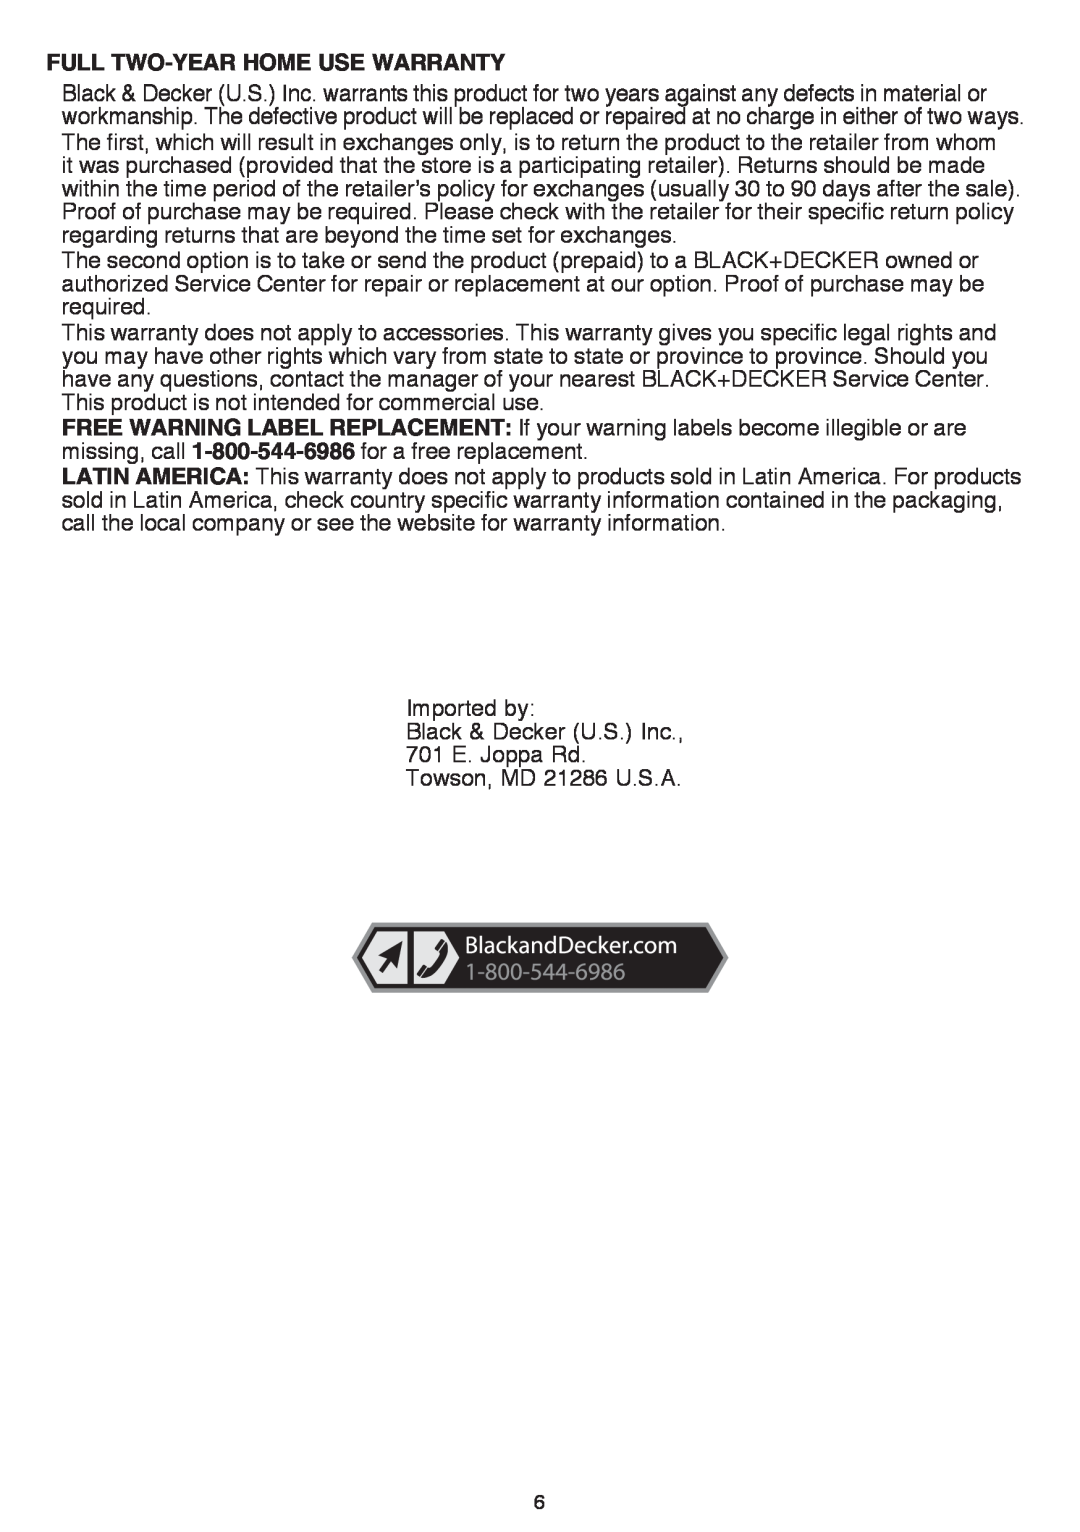 Black & Decker BDCMTJS instruction manual Full Two-YearHome Use Warranty 